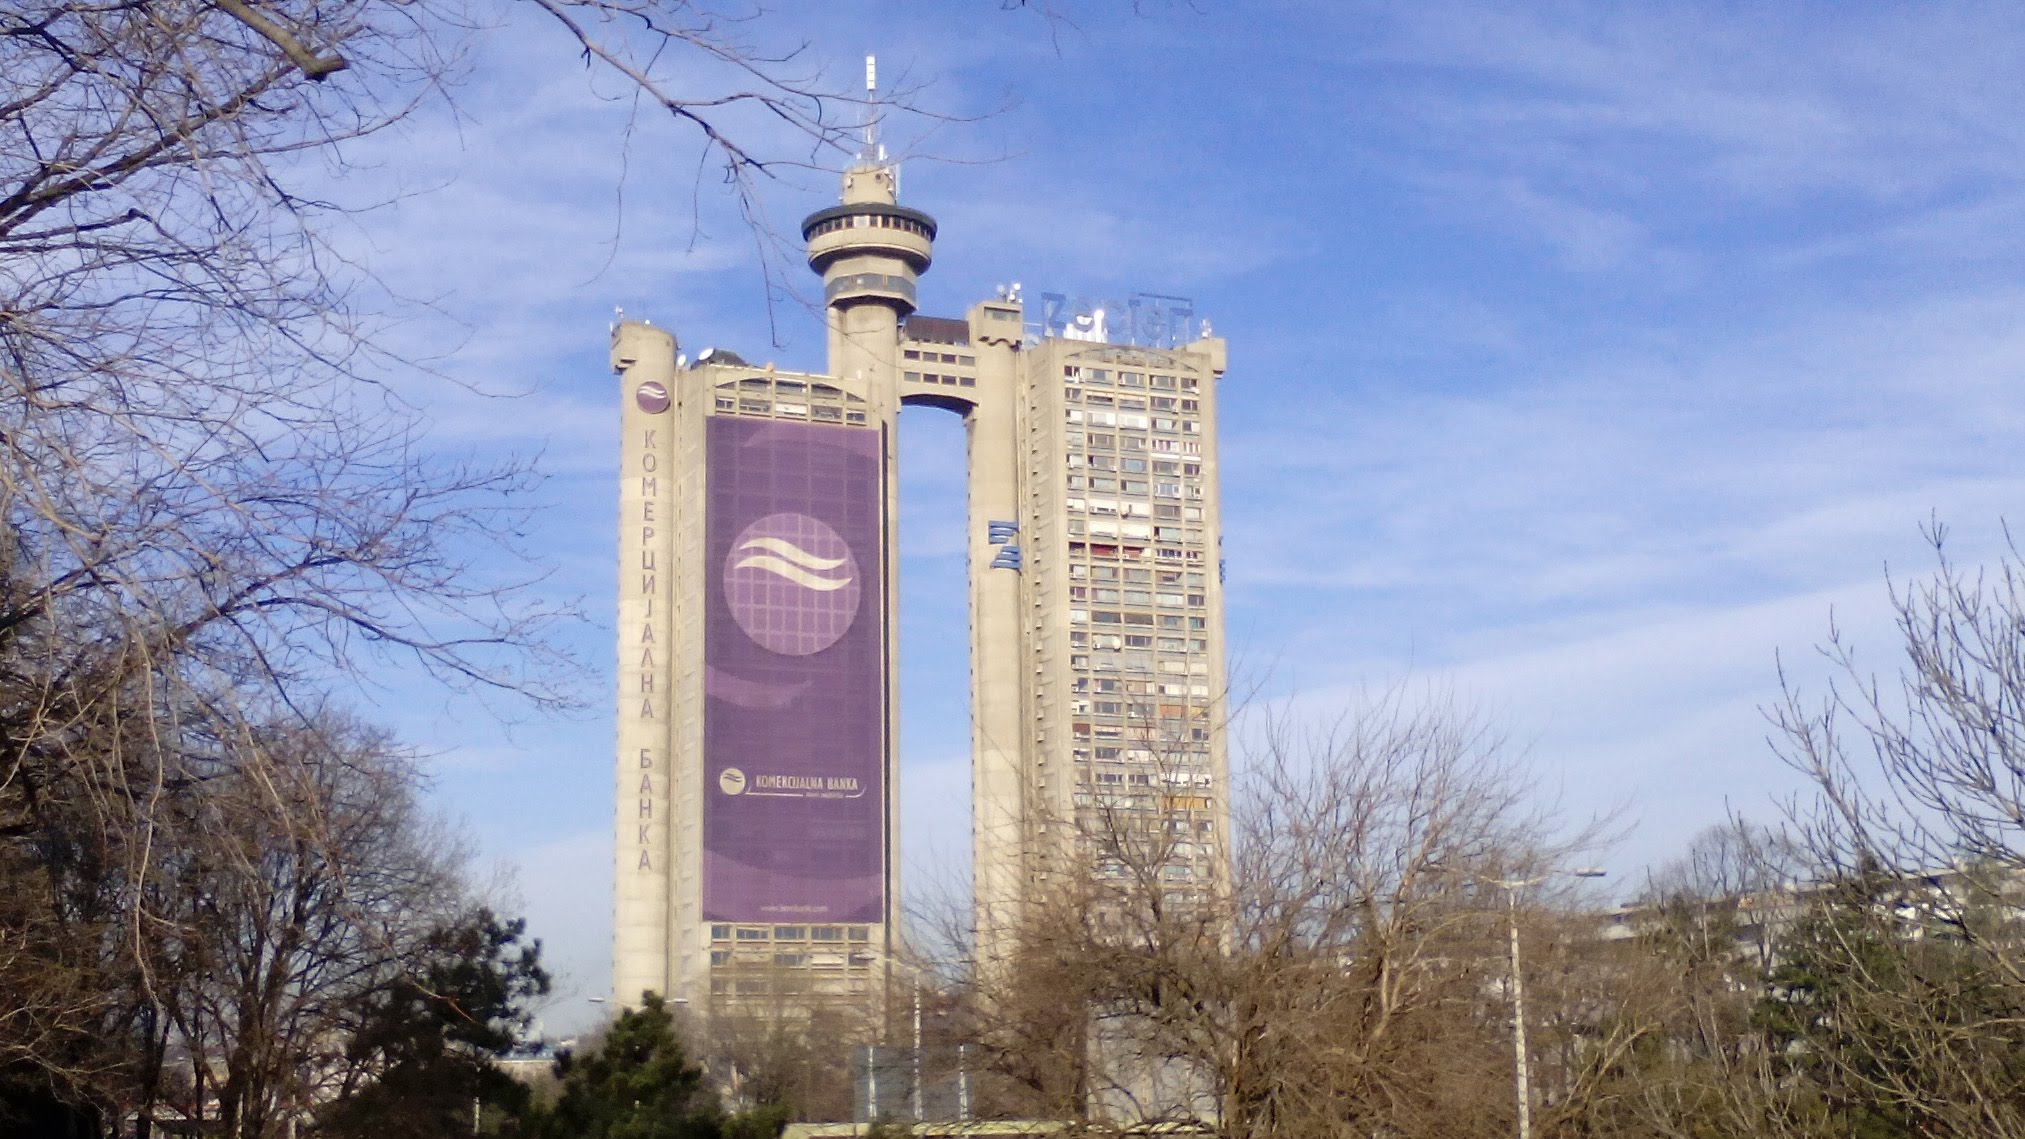 Genex Tower - Western City Gate, Belgrade, Serbia - YouTube